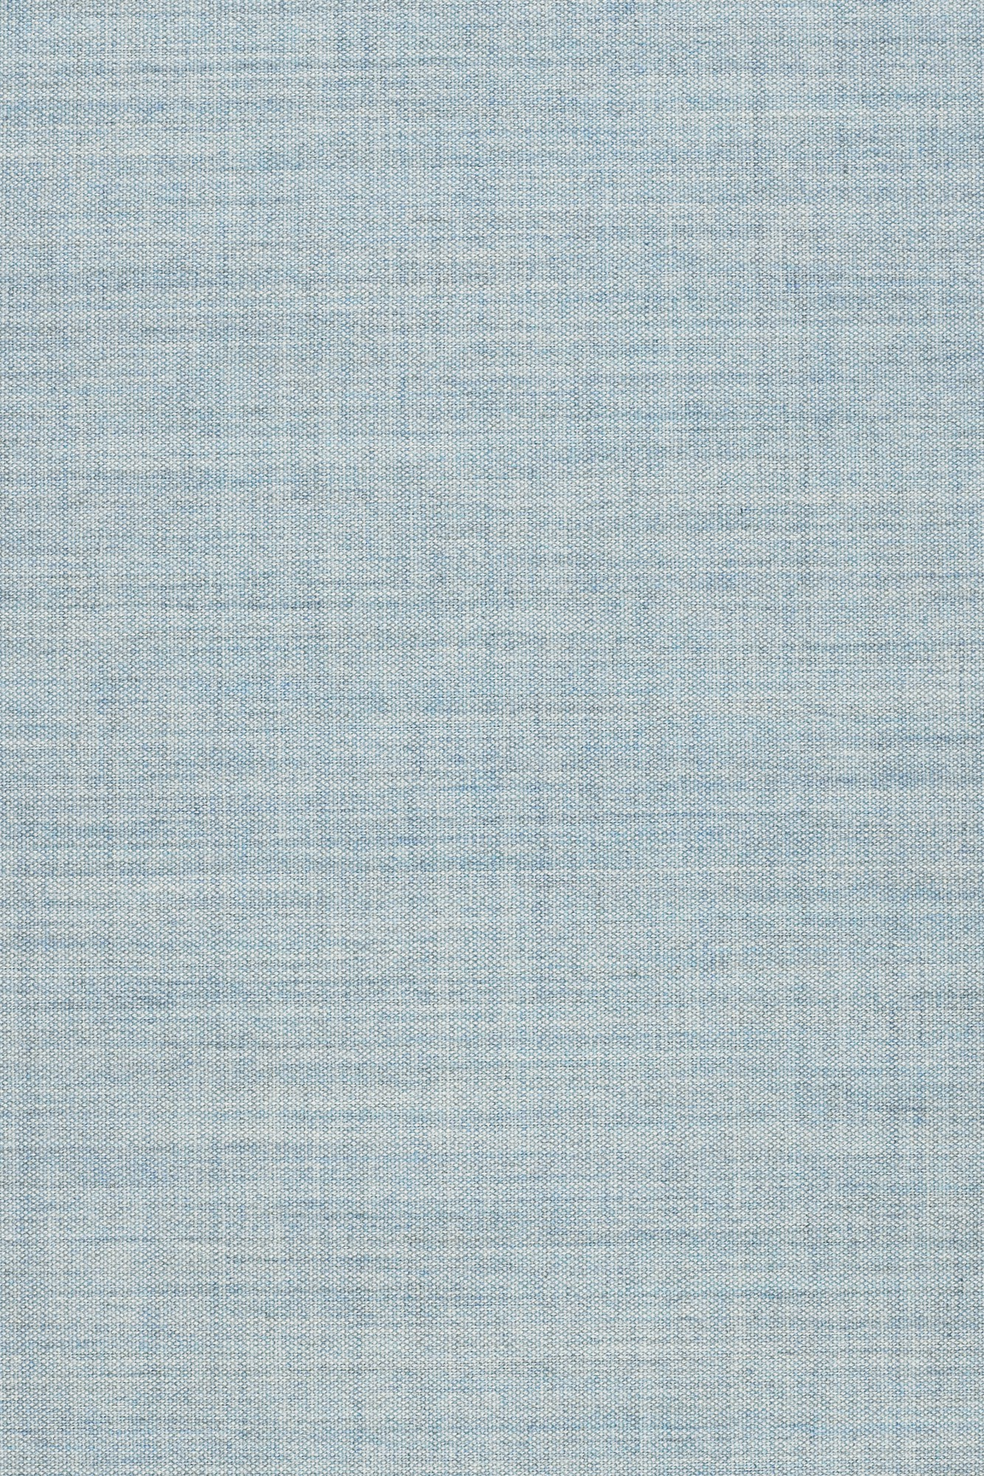 Fabric sample Remix 2 823 blue